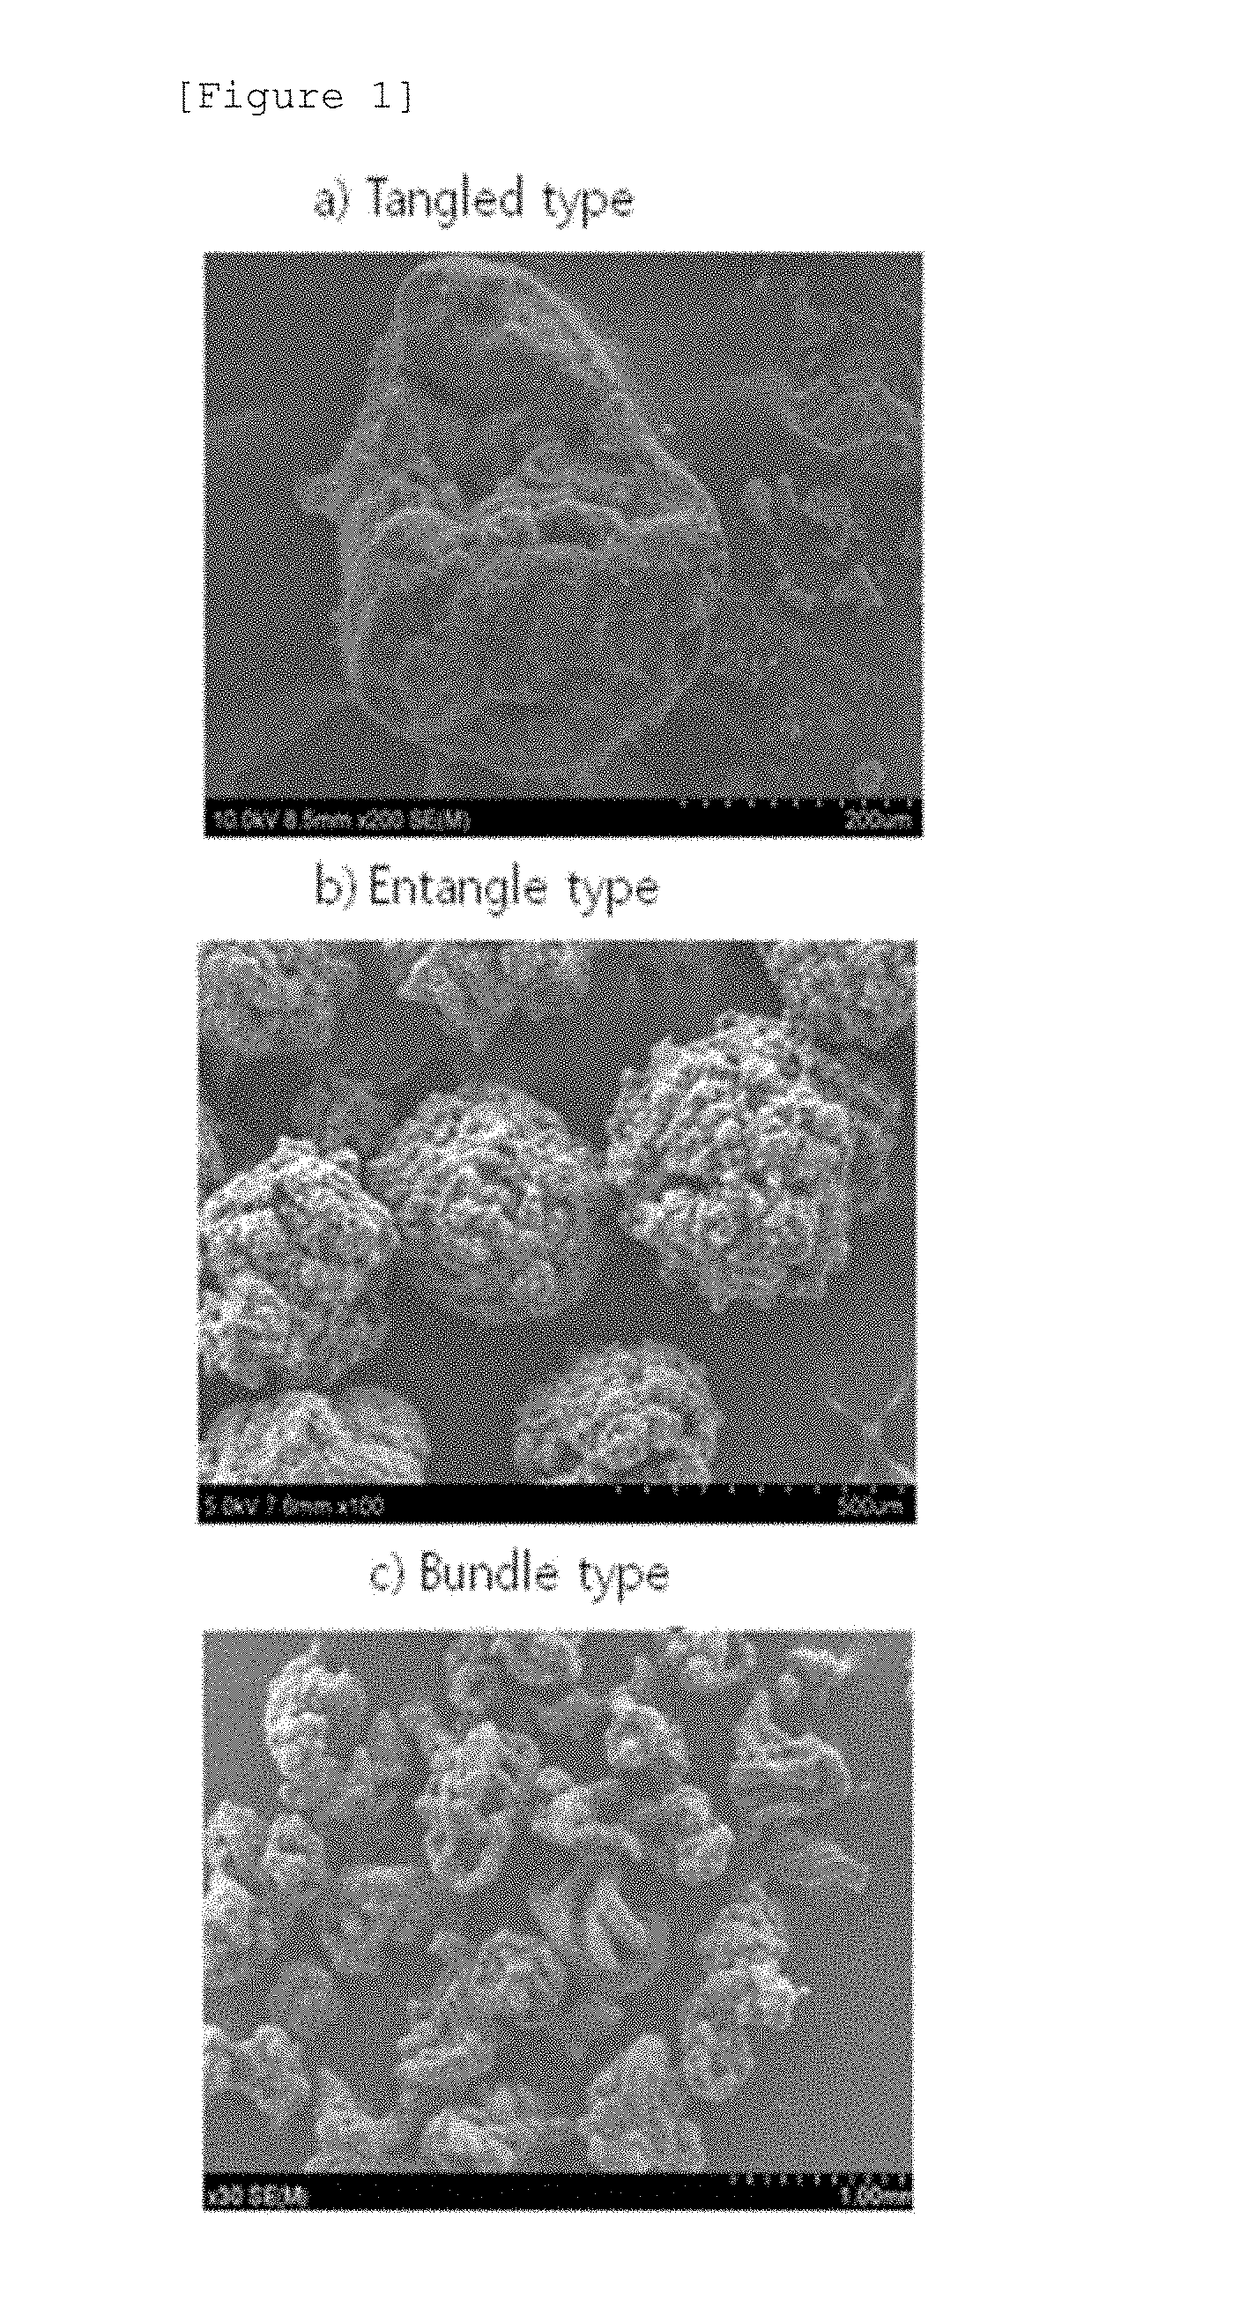 Carbon nanotube-sulfur composite comprising carbon nanotube aggregates, and method for preparing same